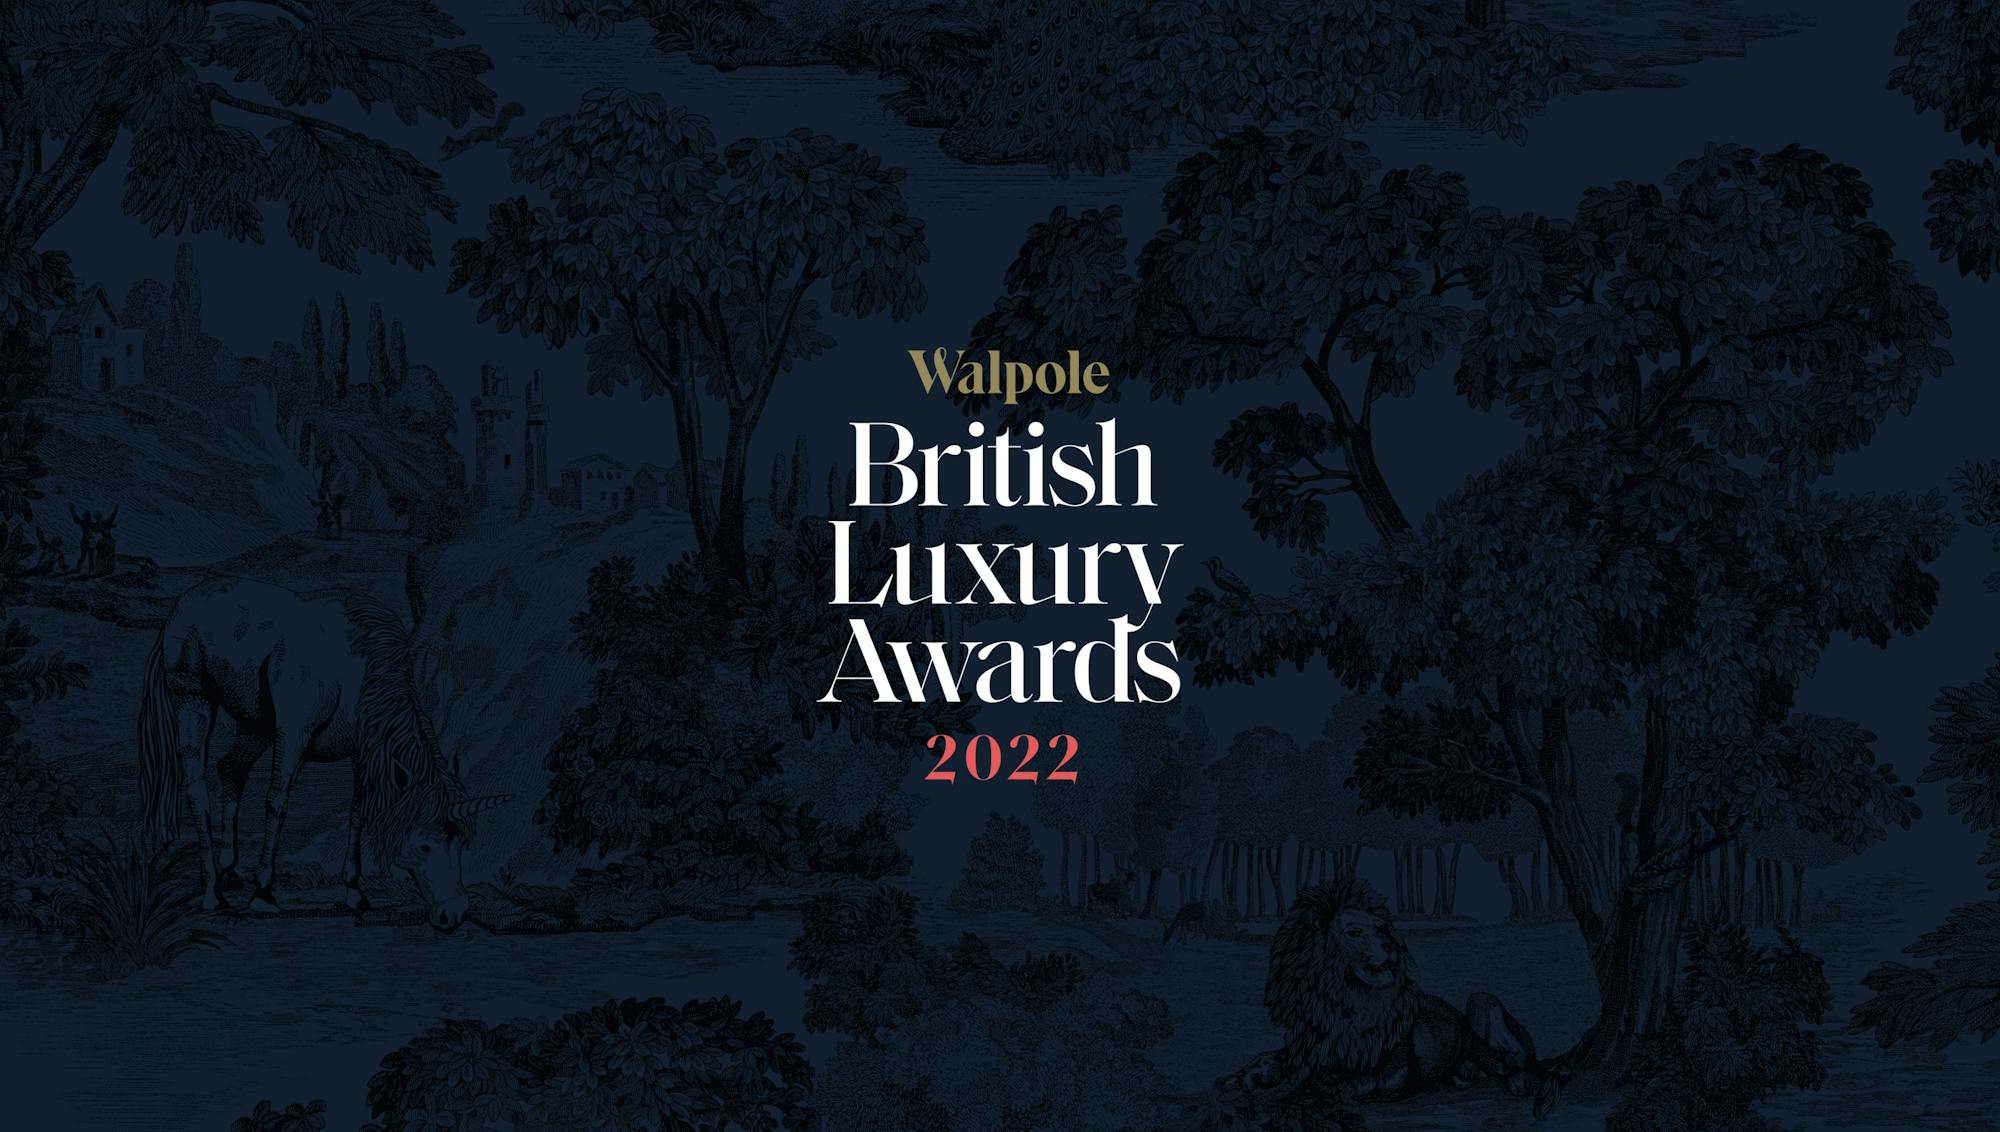 Walpole Awards All the winners at the Walpole British Luxury Awards 2022 